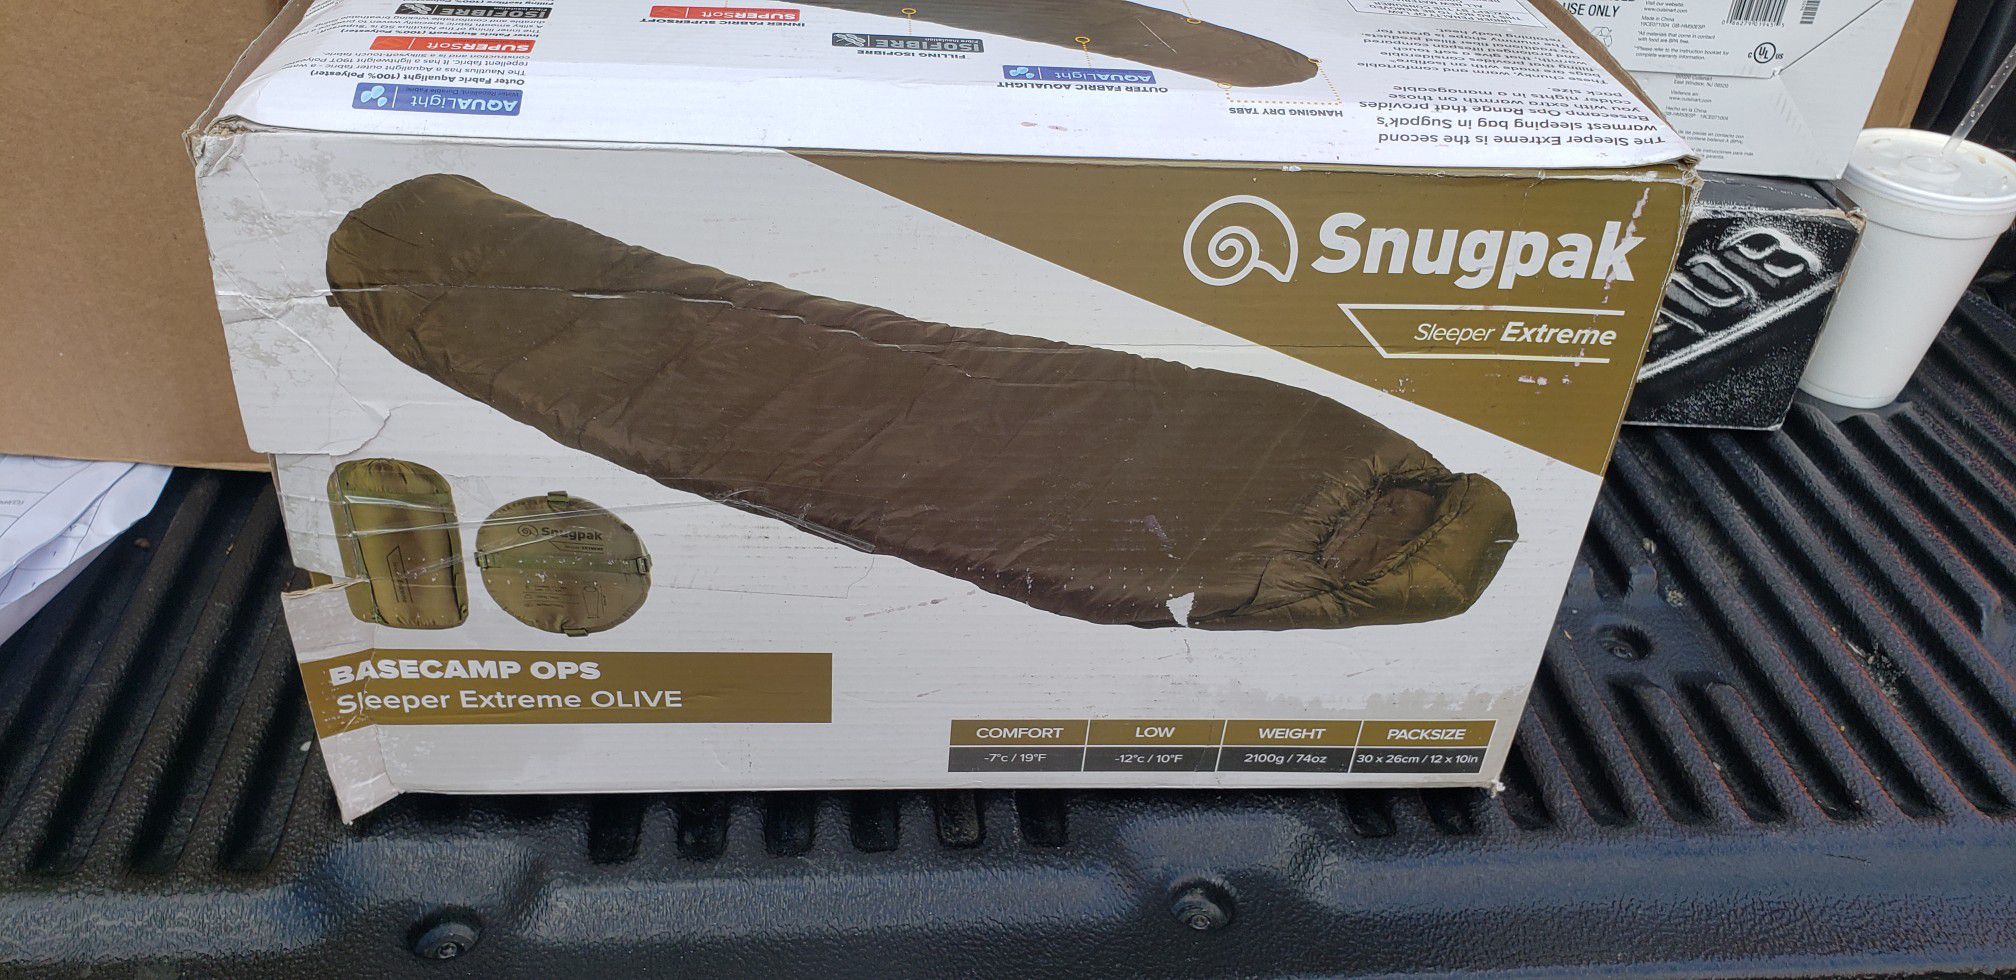 Snugpak Basecamp ops sleeper extreme sleeping bag